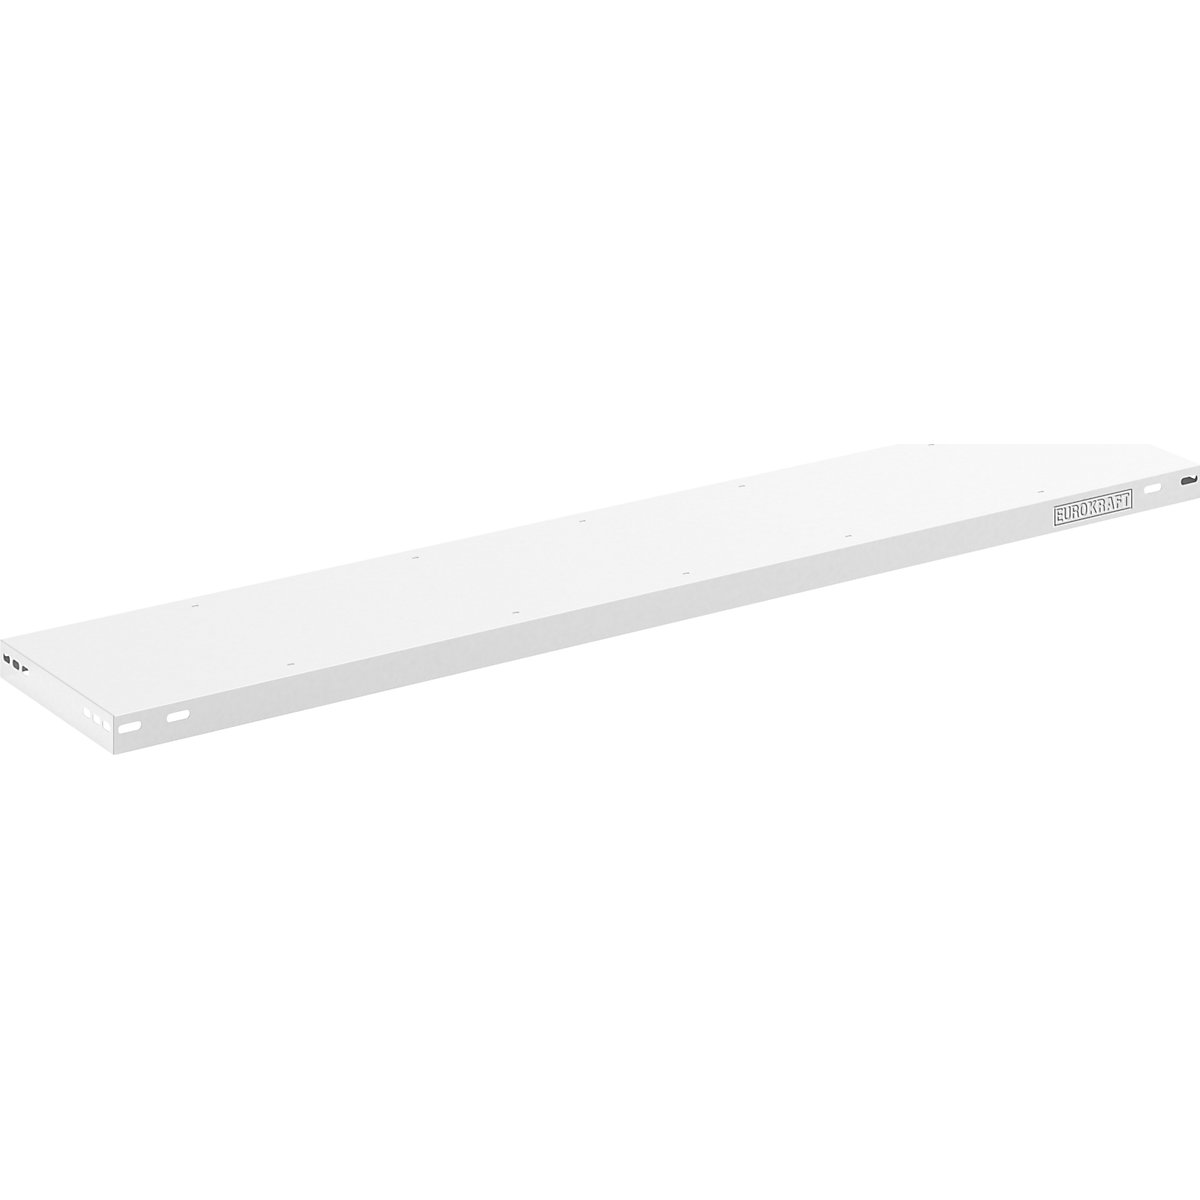 Additional shelf – hofe, WxD 1300 x 300 mm, max. shelf load 200 kg, grey-3